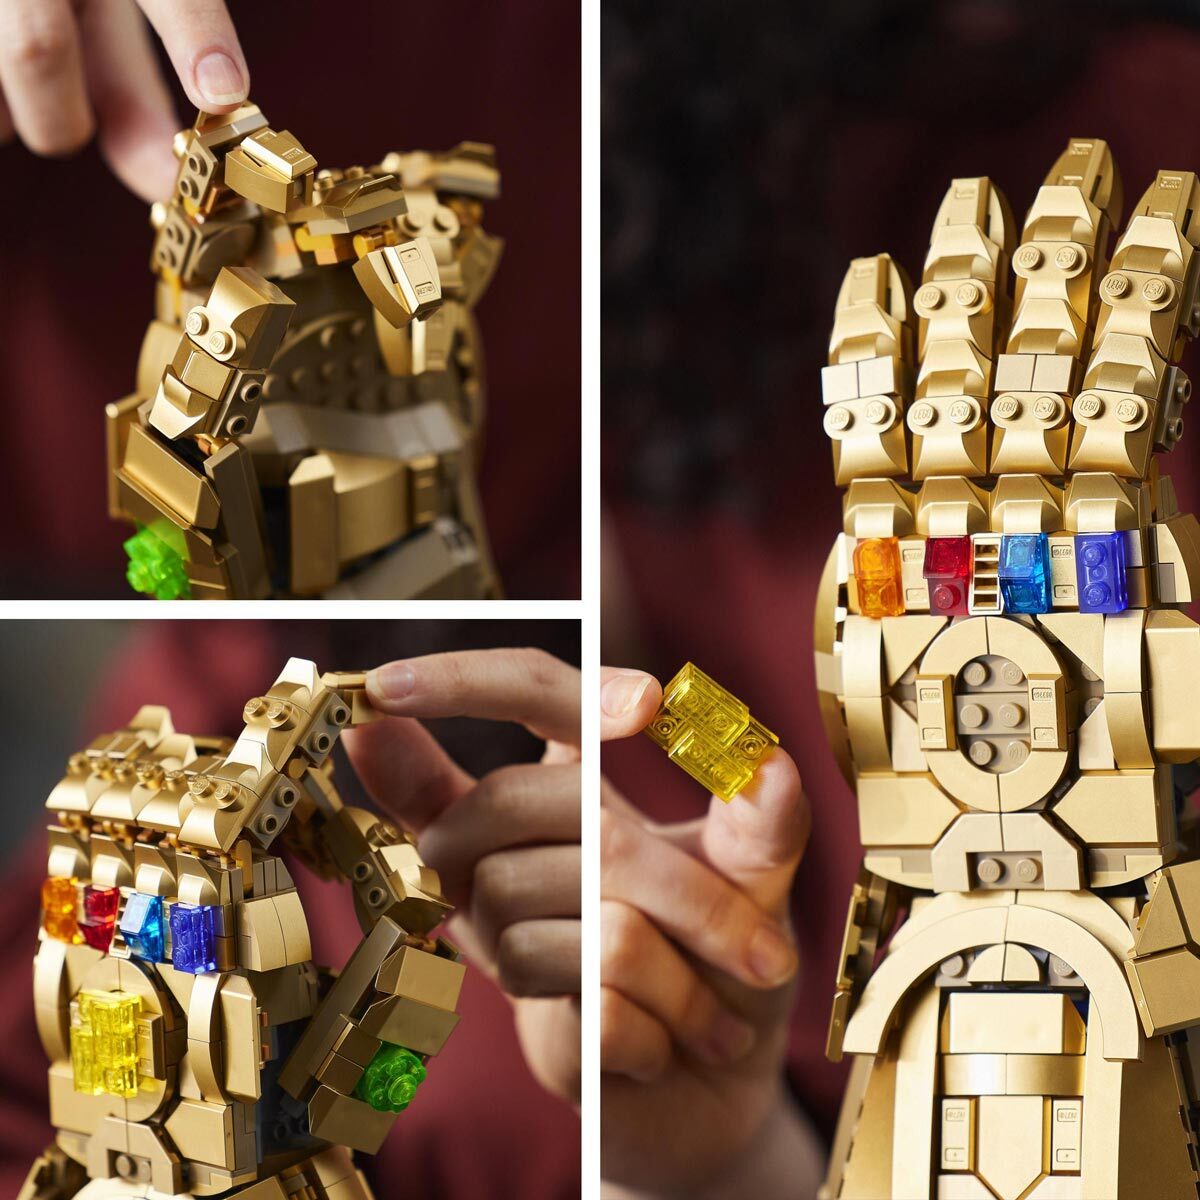 Buy LEGO Marvel Infinity Gauntlet Close up Image at costco.co.uk